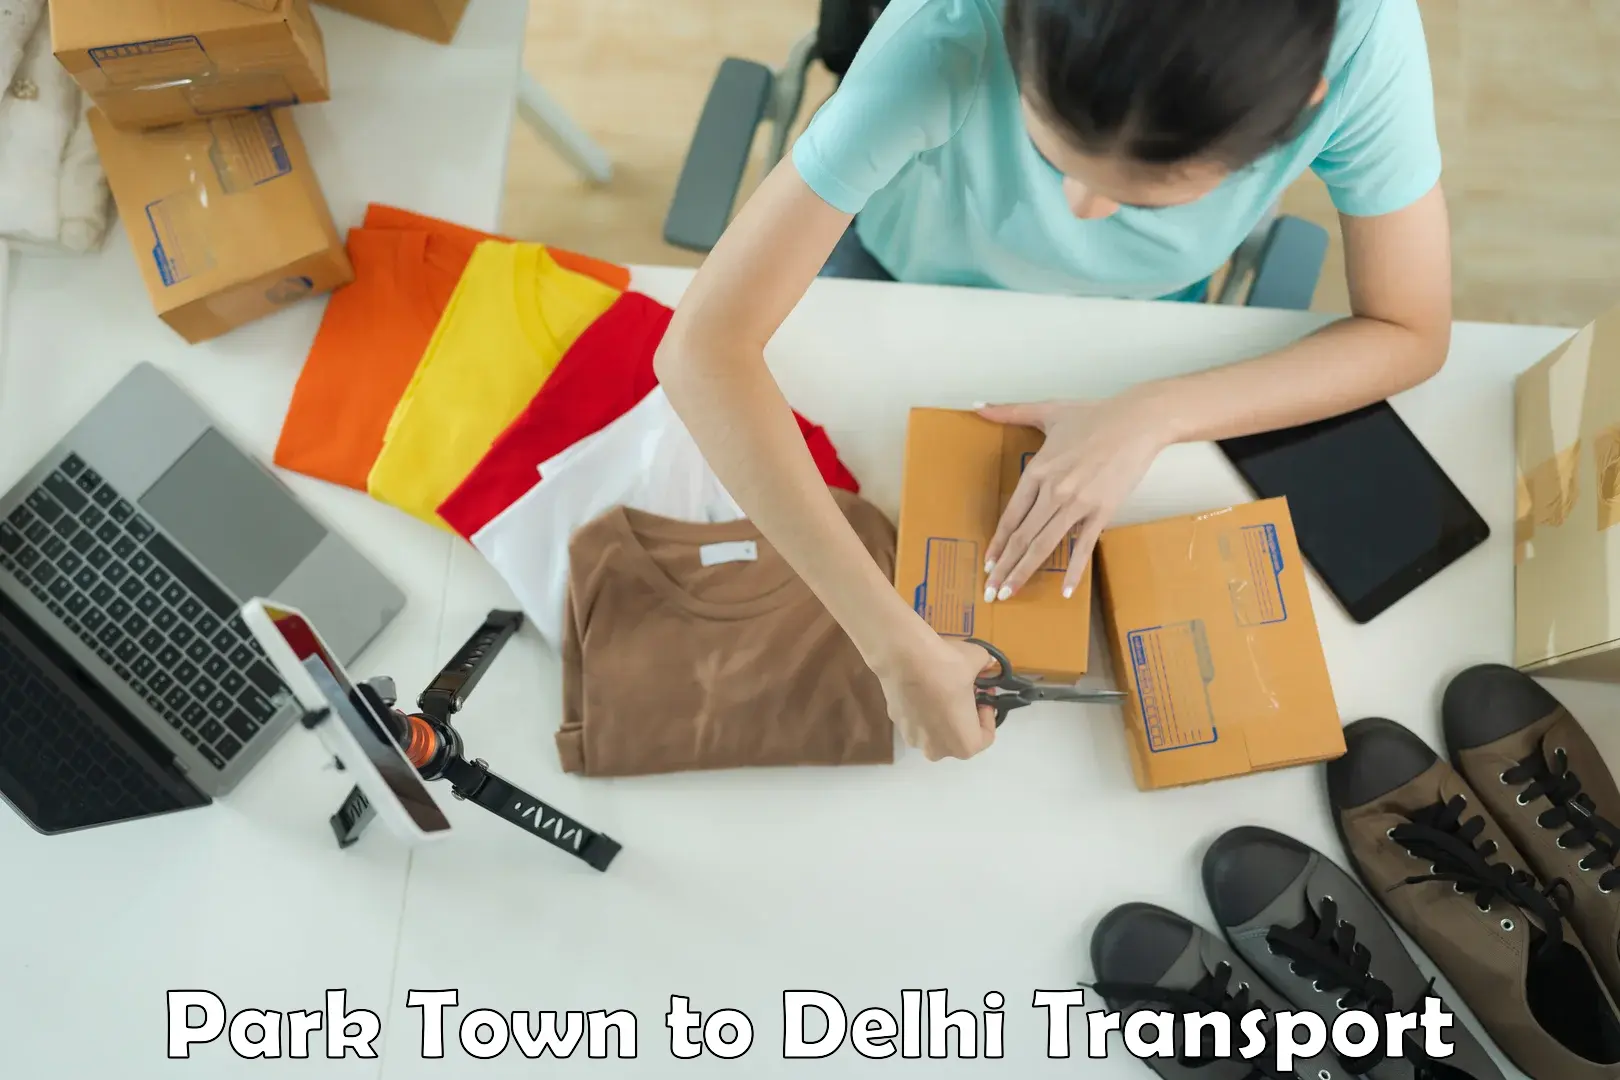 Commercial transport service Park Town to Delhi Technological University DTU